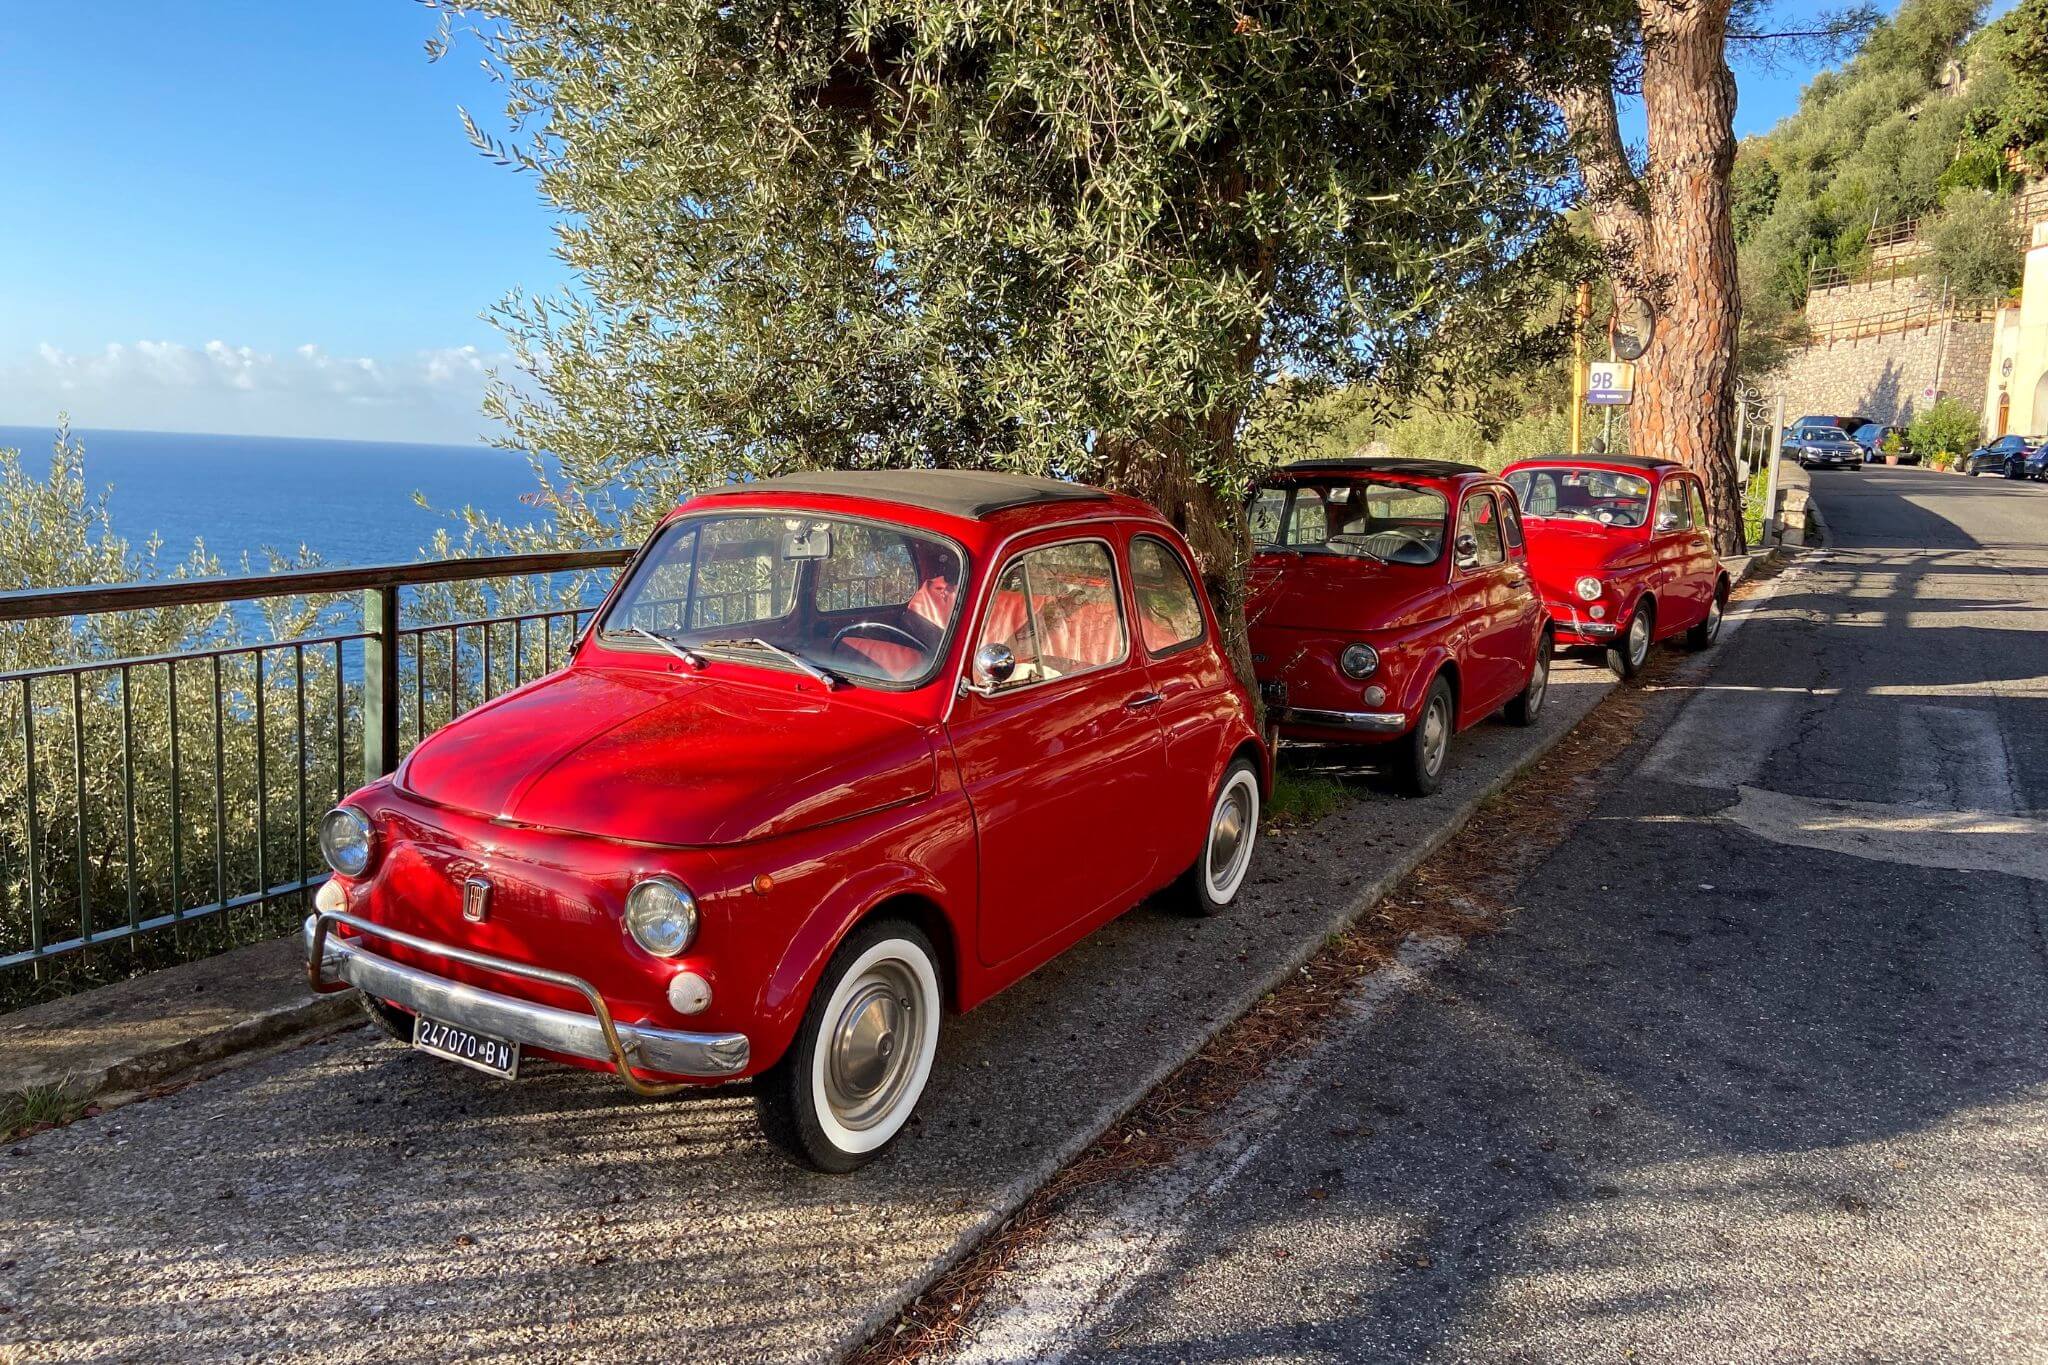 Vintage Red Fiat 500 Cars parked on the Amalfi Coast